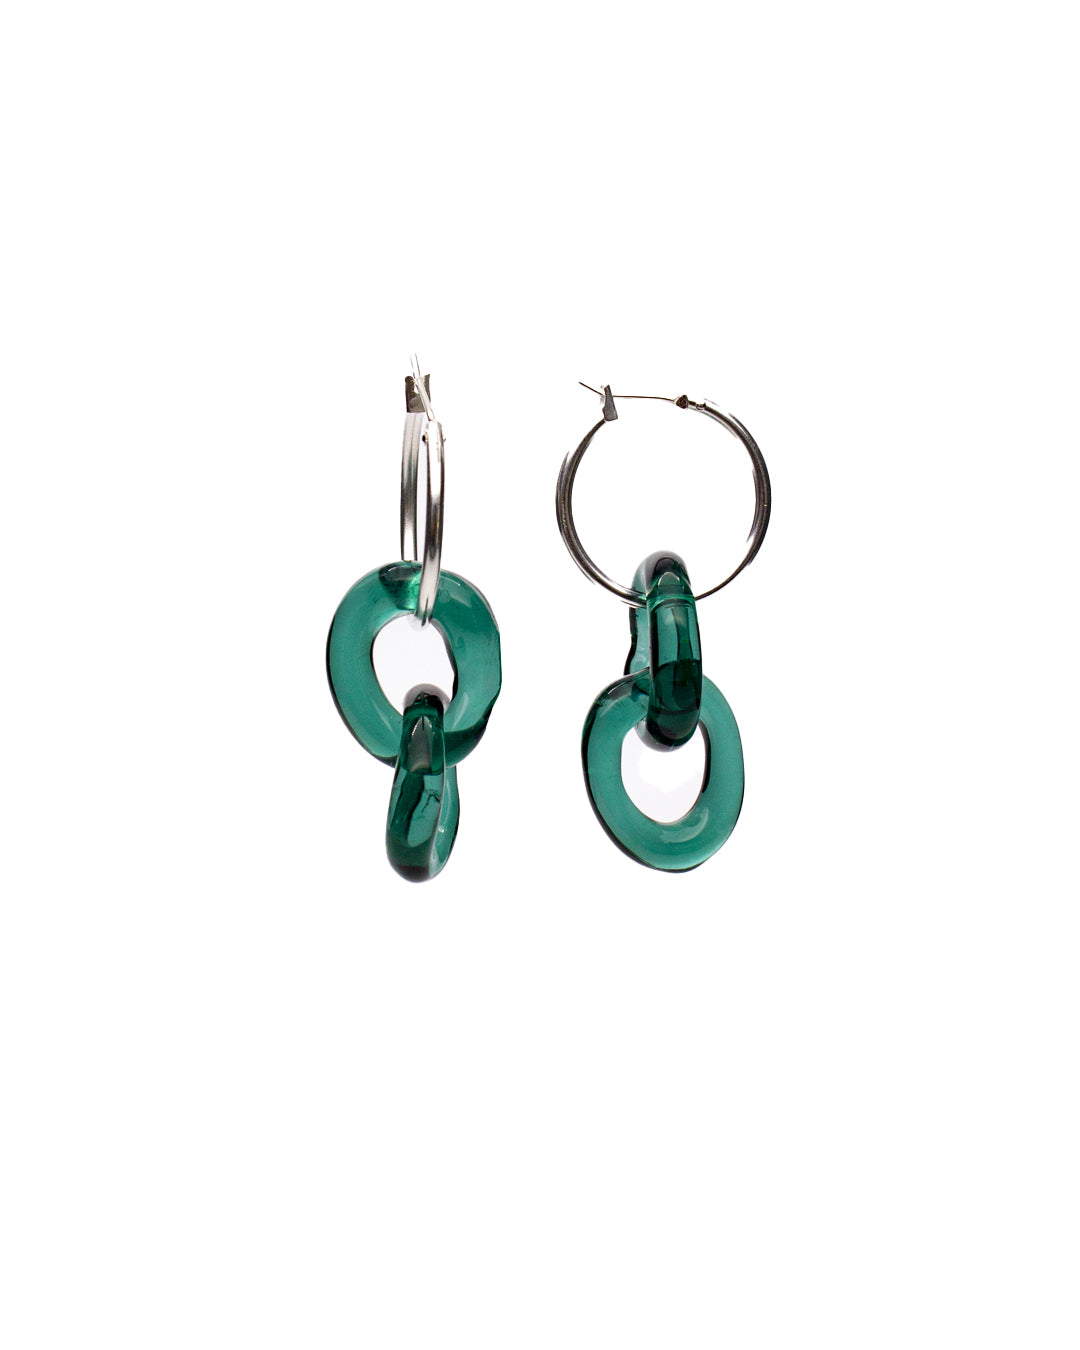 Handmade glass earrings - SiO2 Glass Jewelry